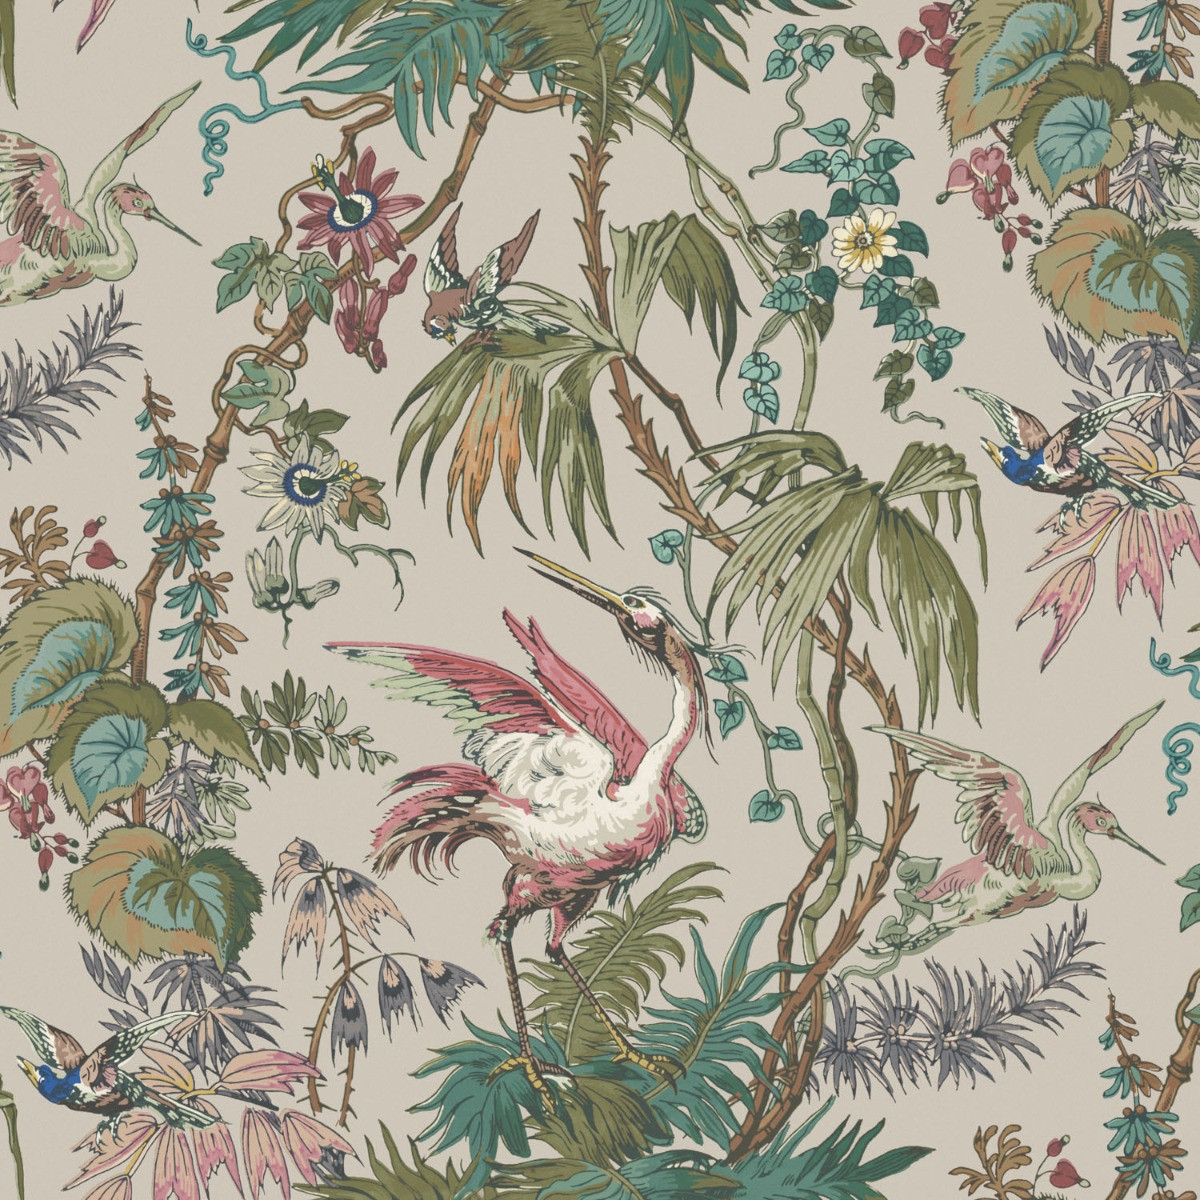 Herons Wallpapers